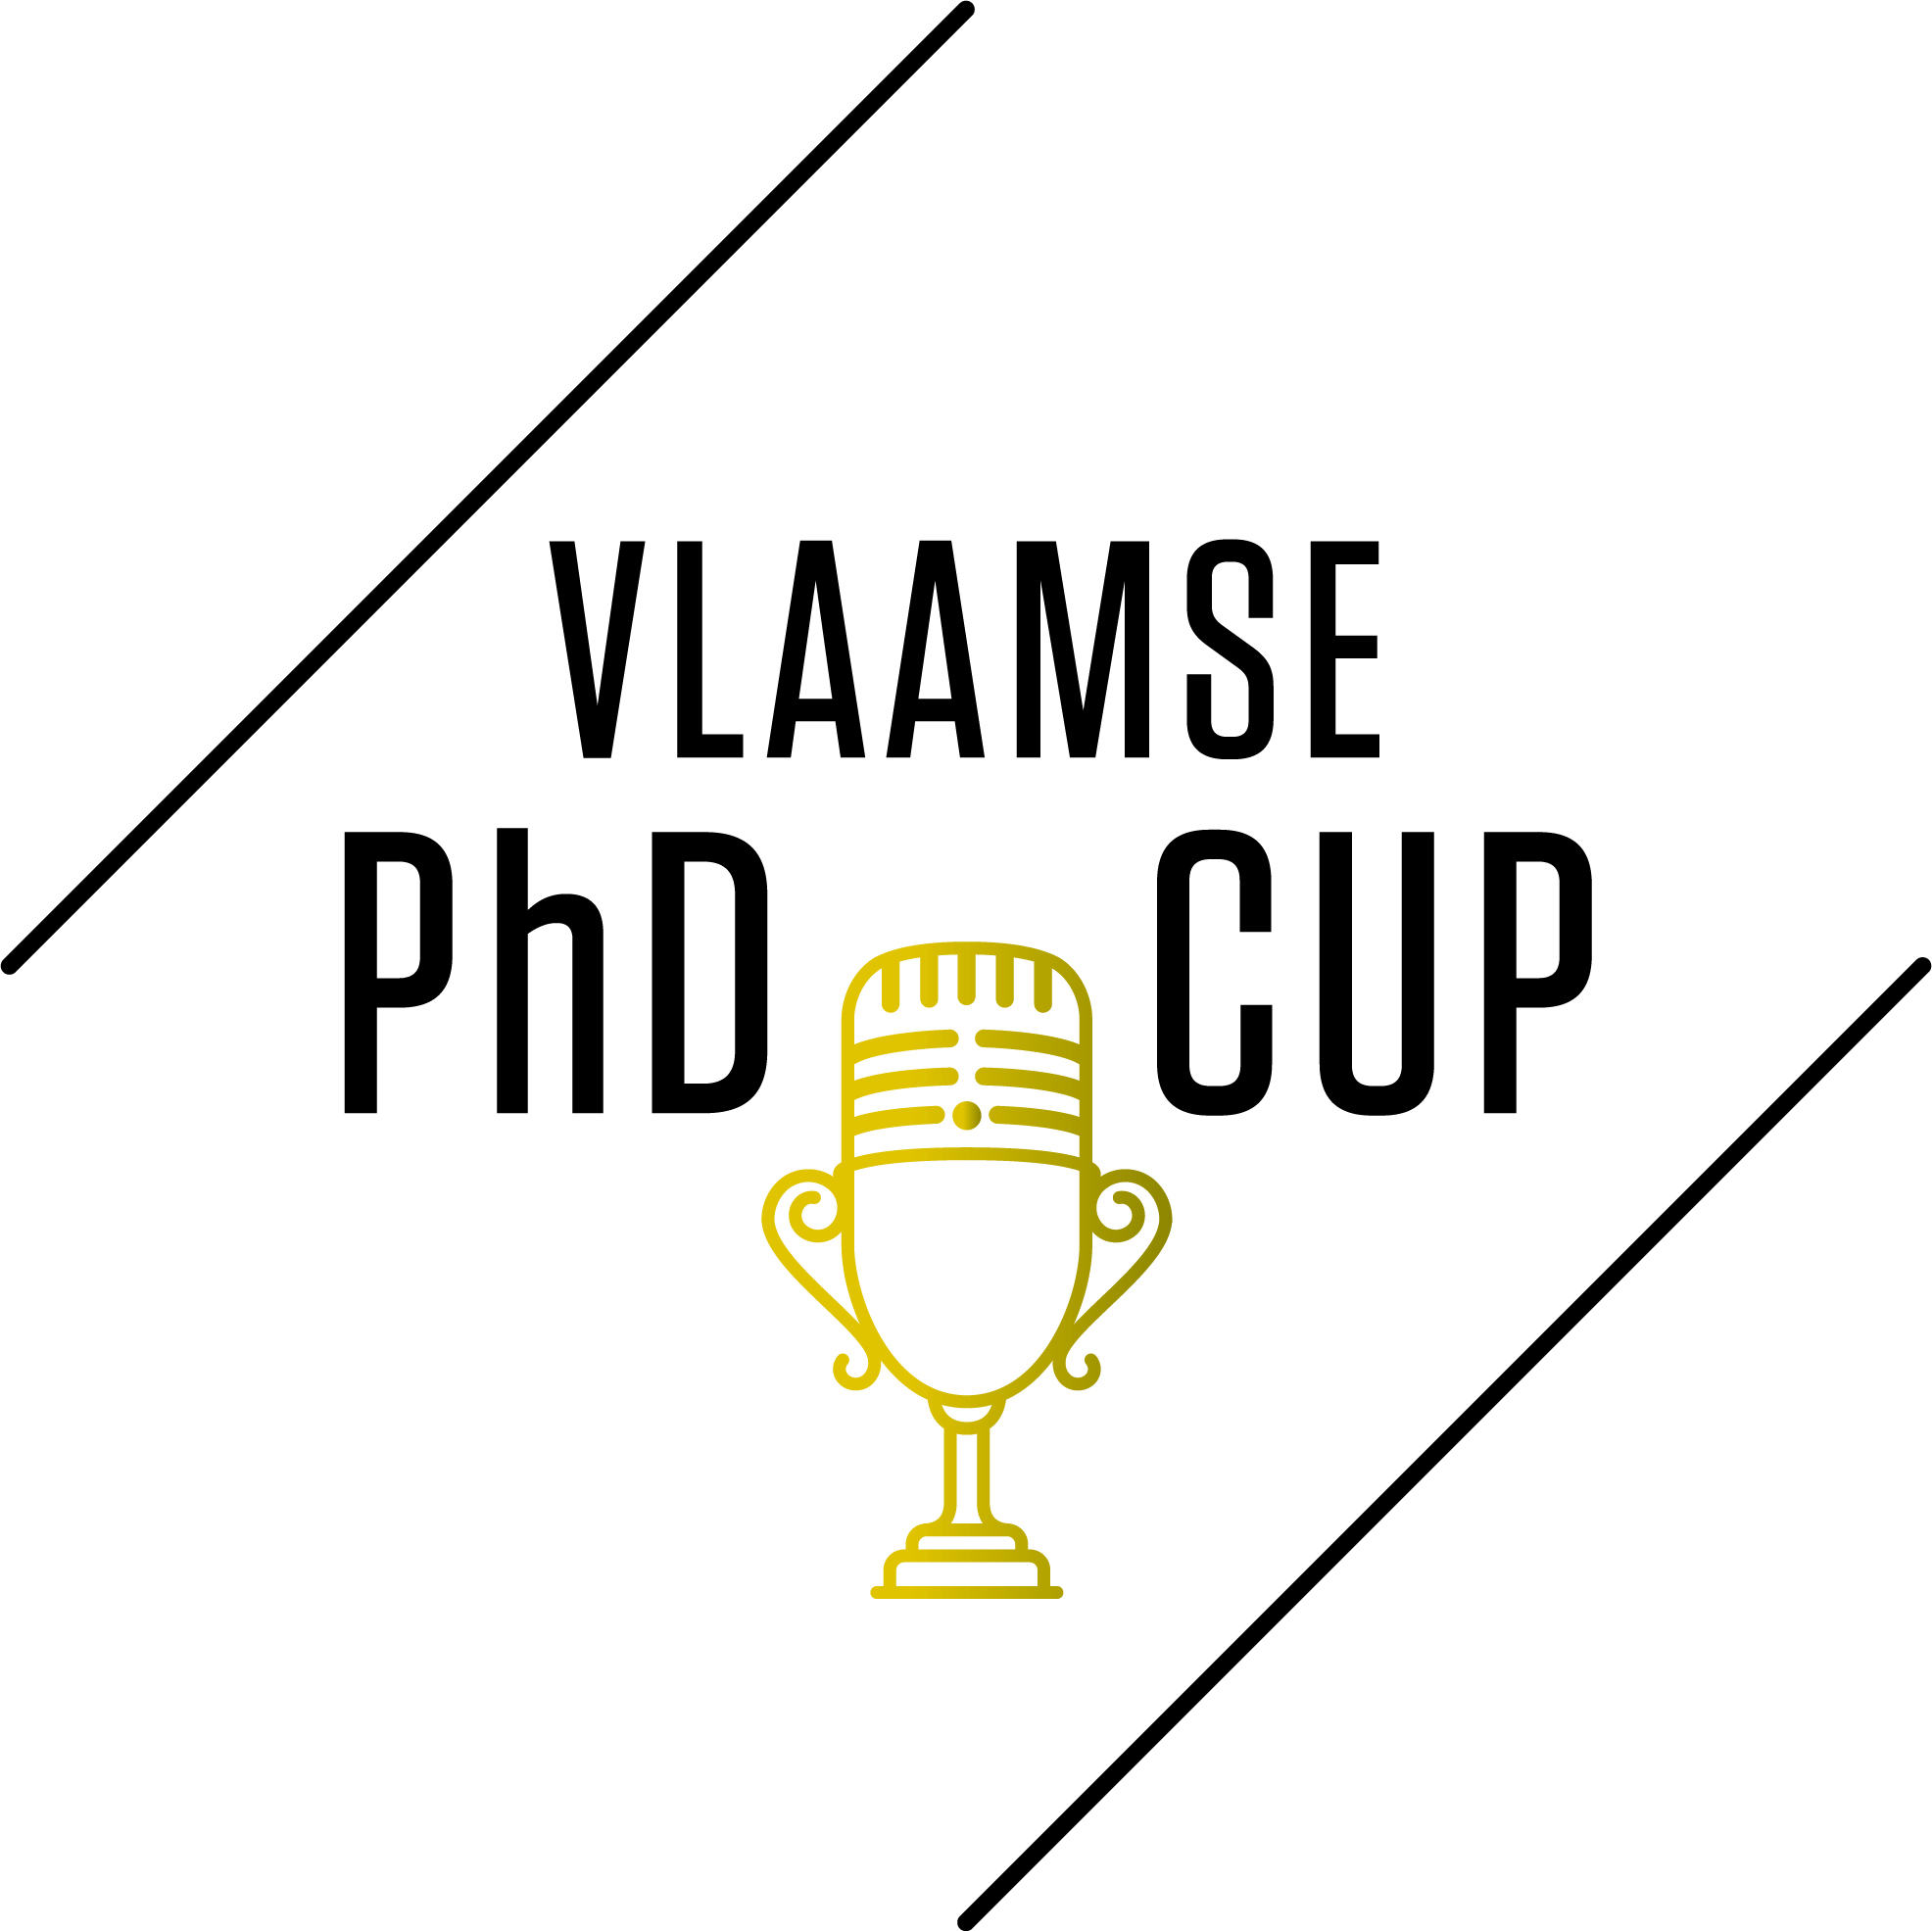 PhD Cup